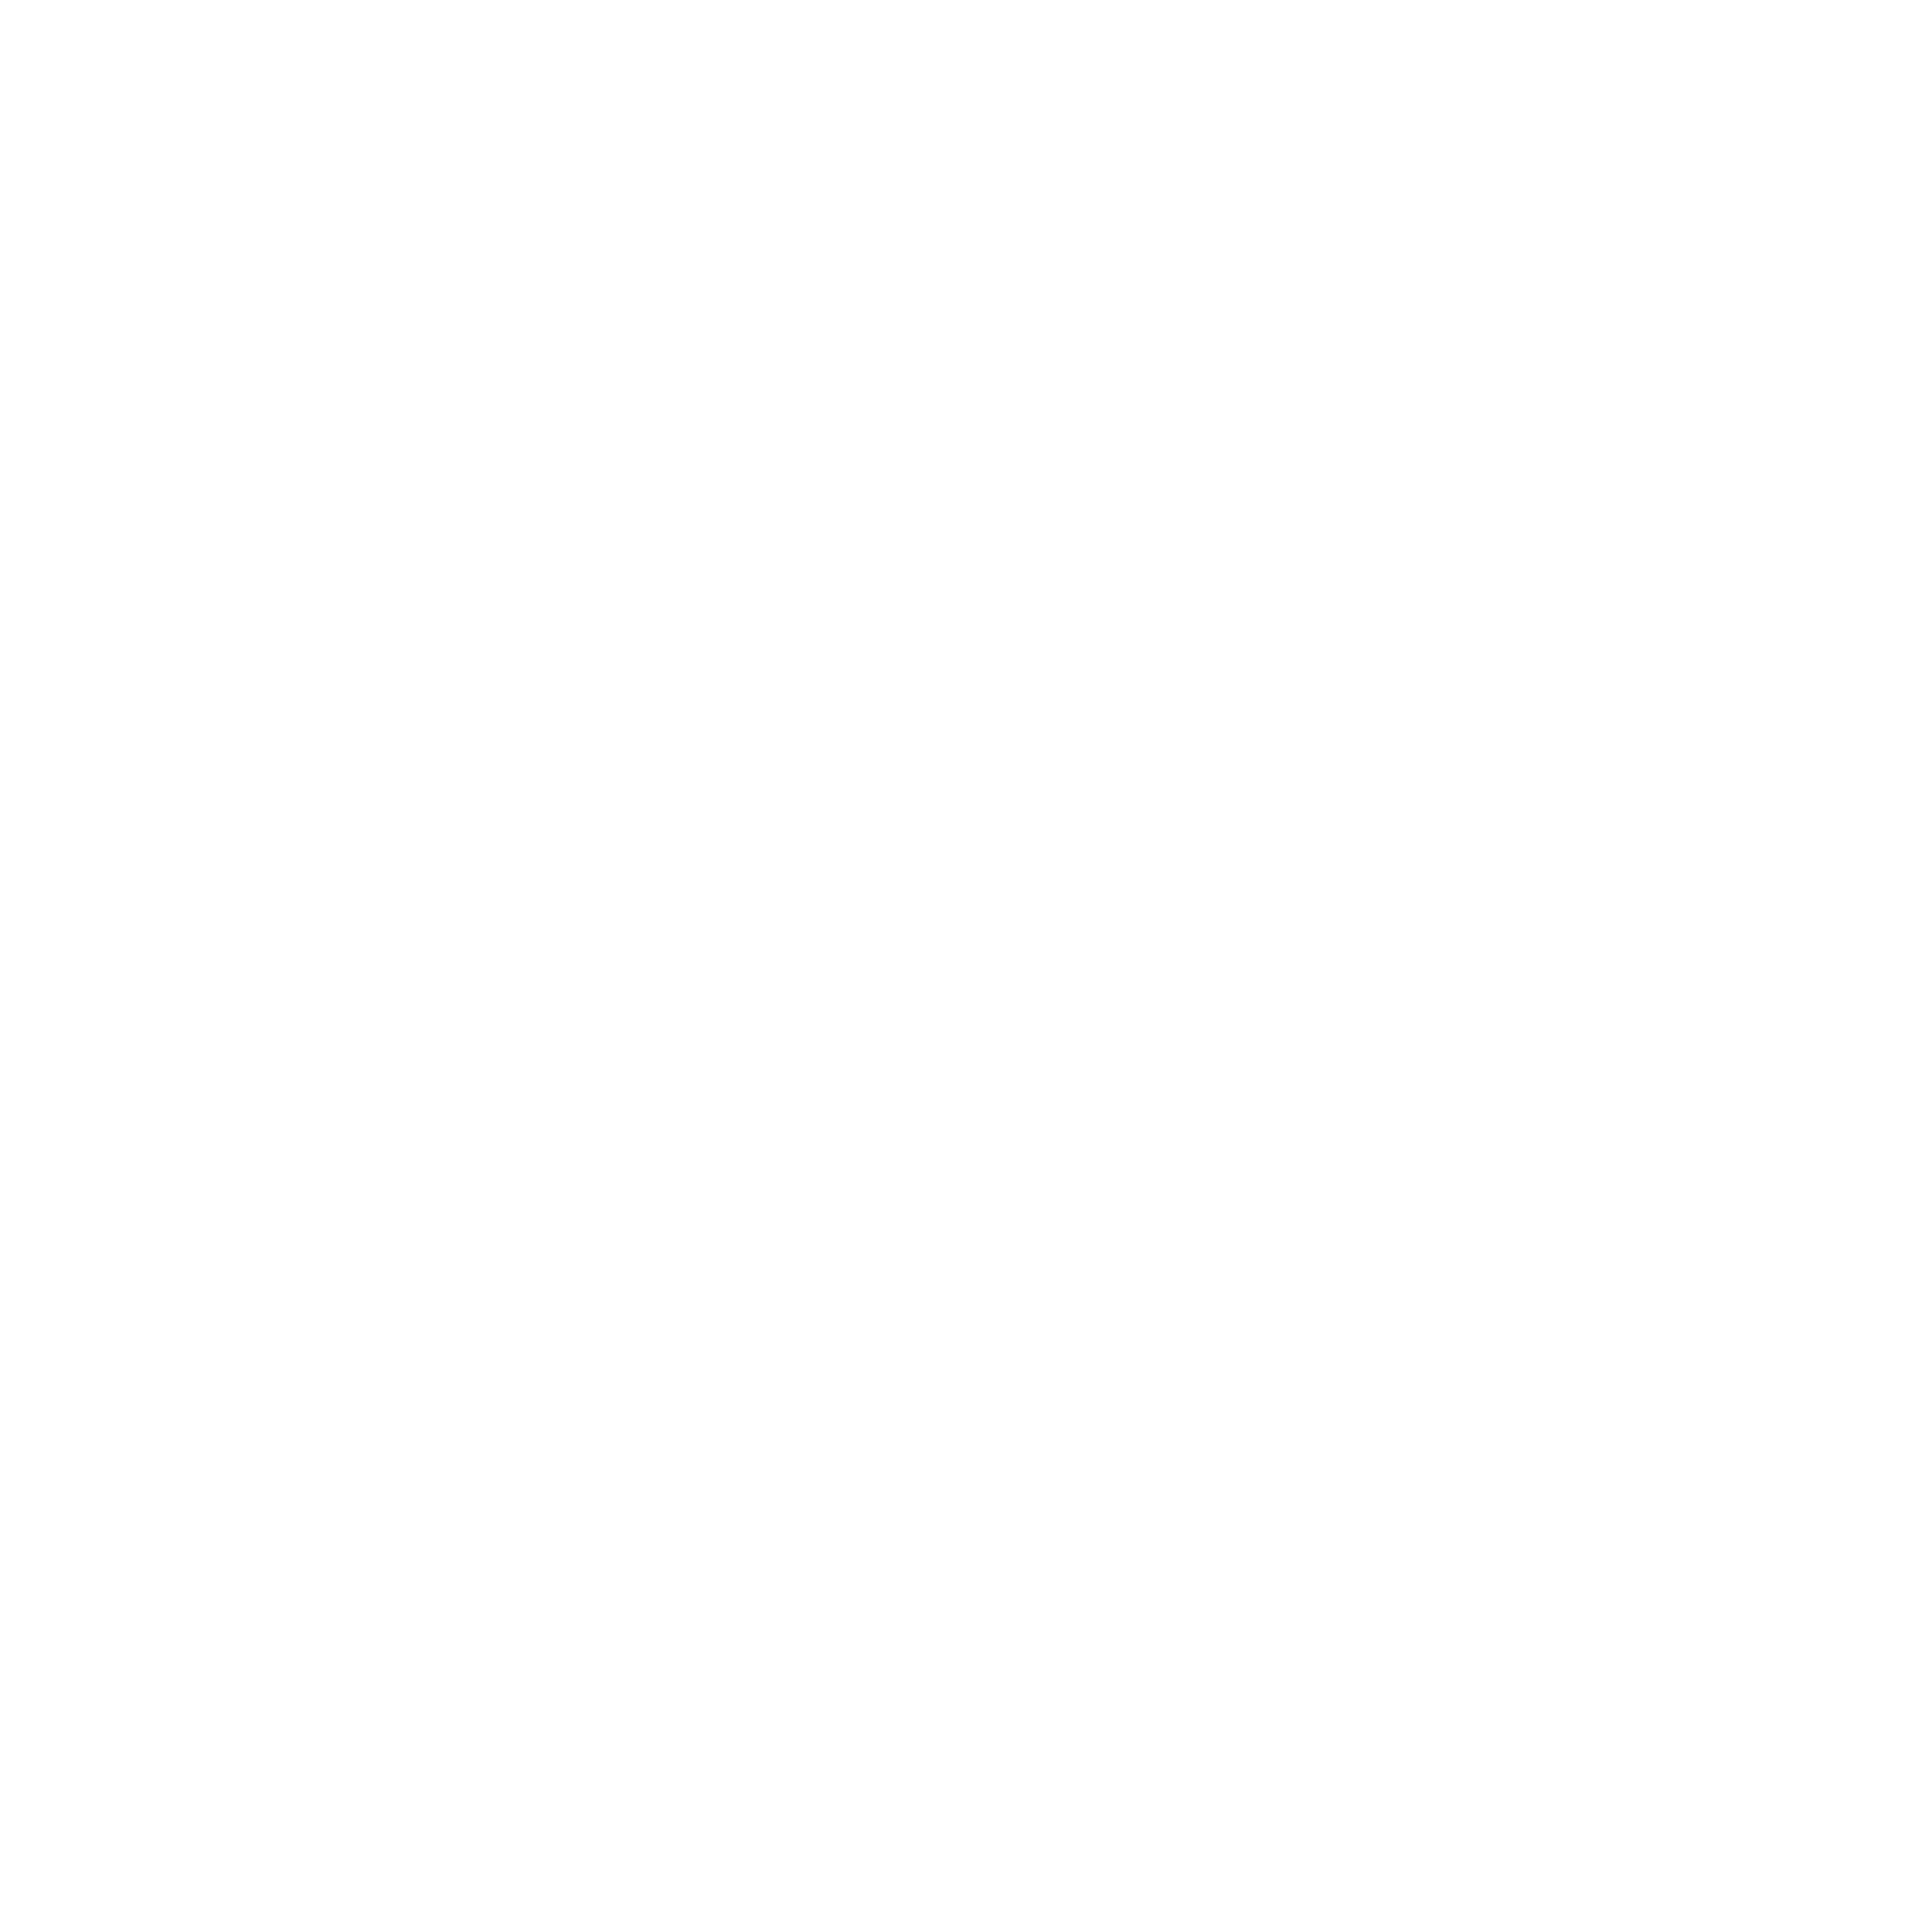 The Félix Cup